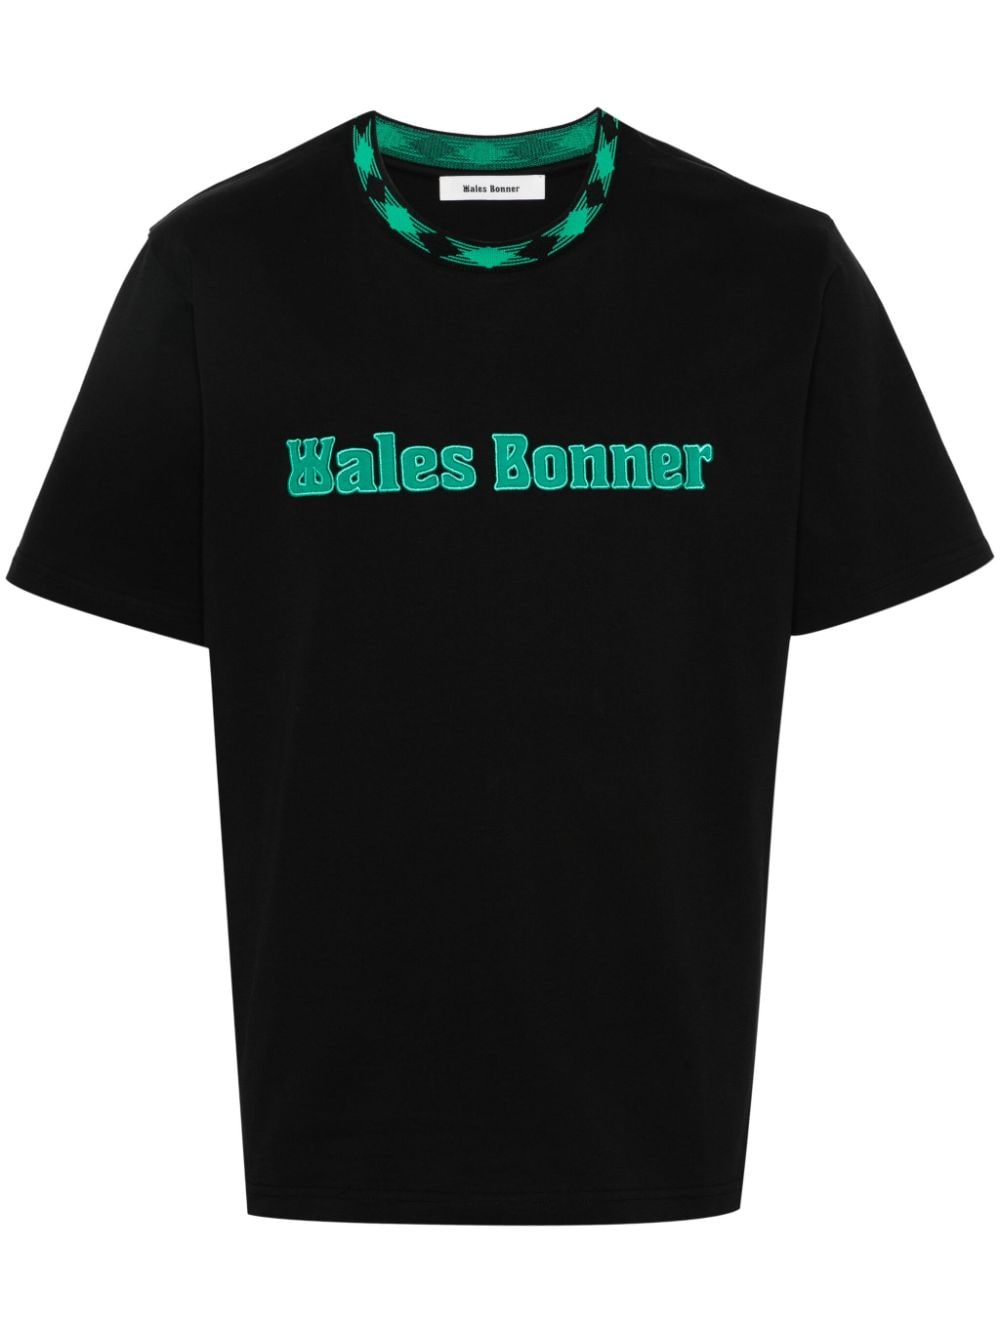 Wales Bonner WALES BONNER- Logo Cotton T-shirt